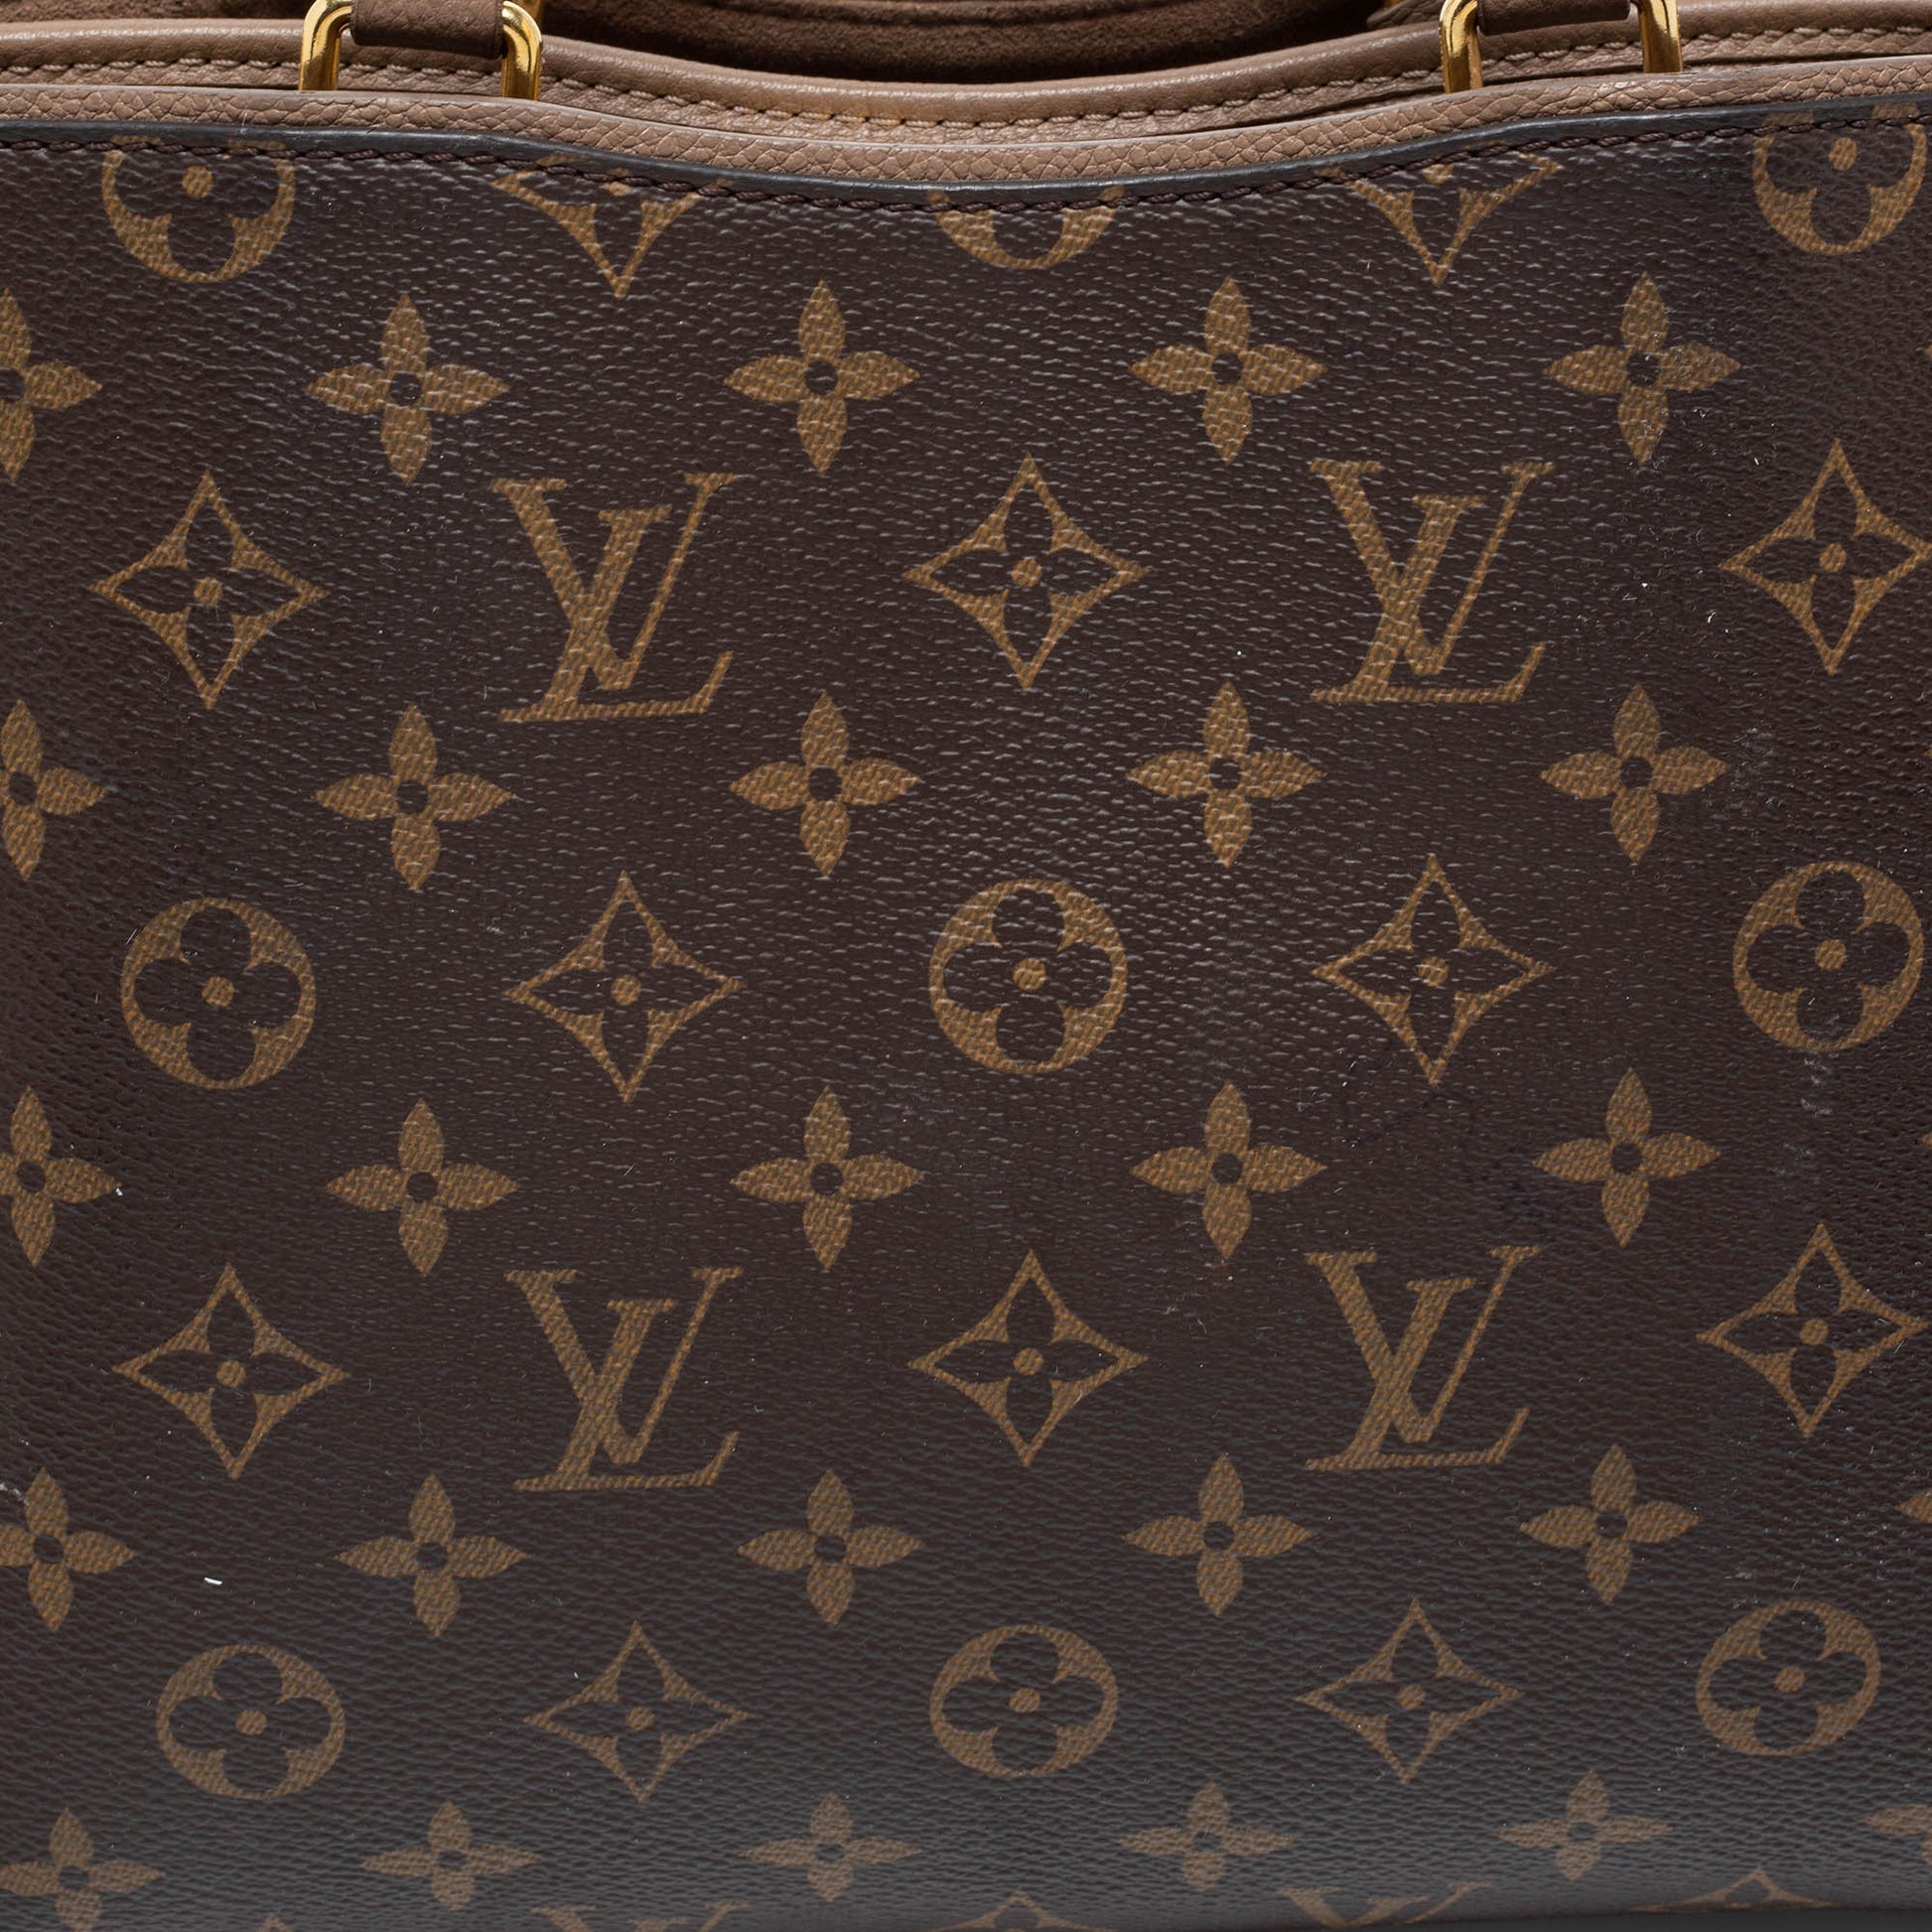 Louis Vuitton Popincourt PM Bag Monogram Canvas/Cerise GHW